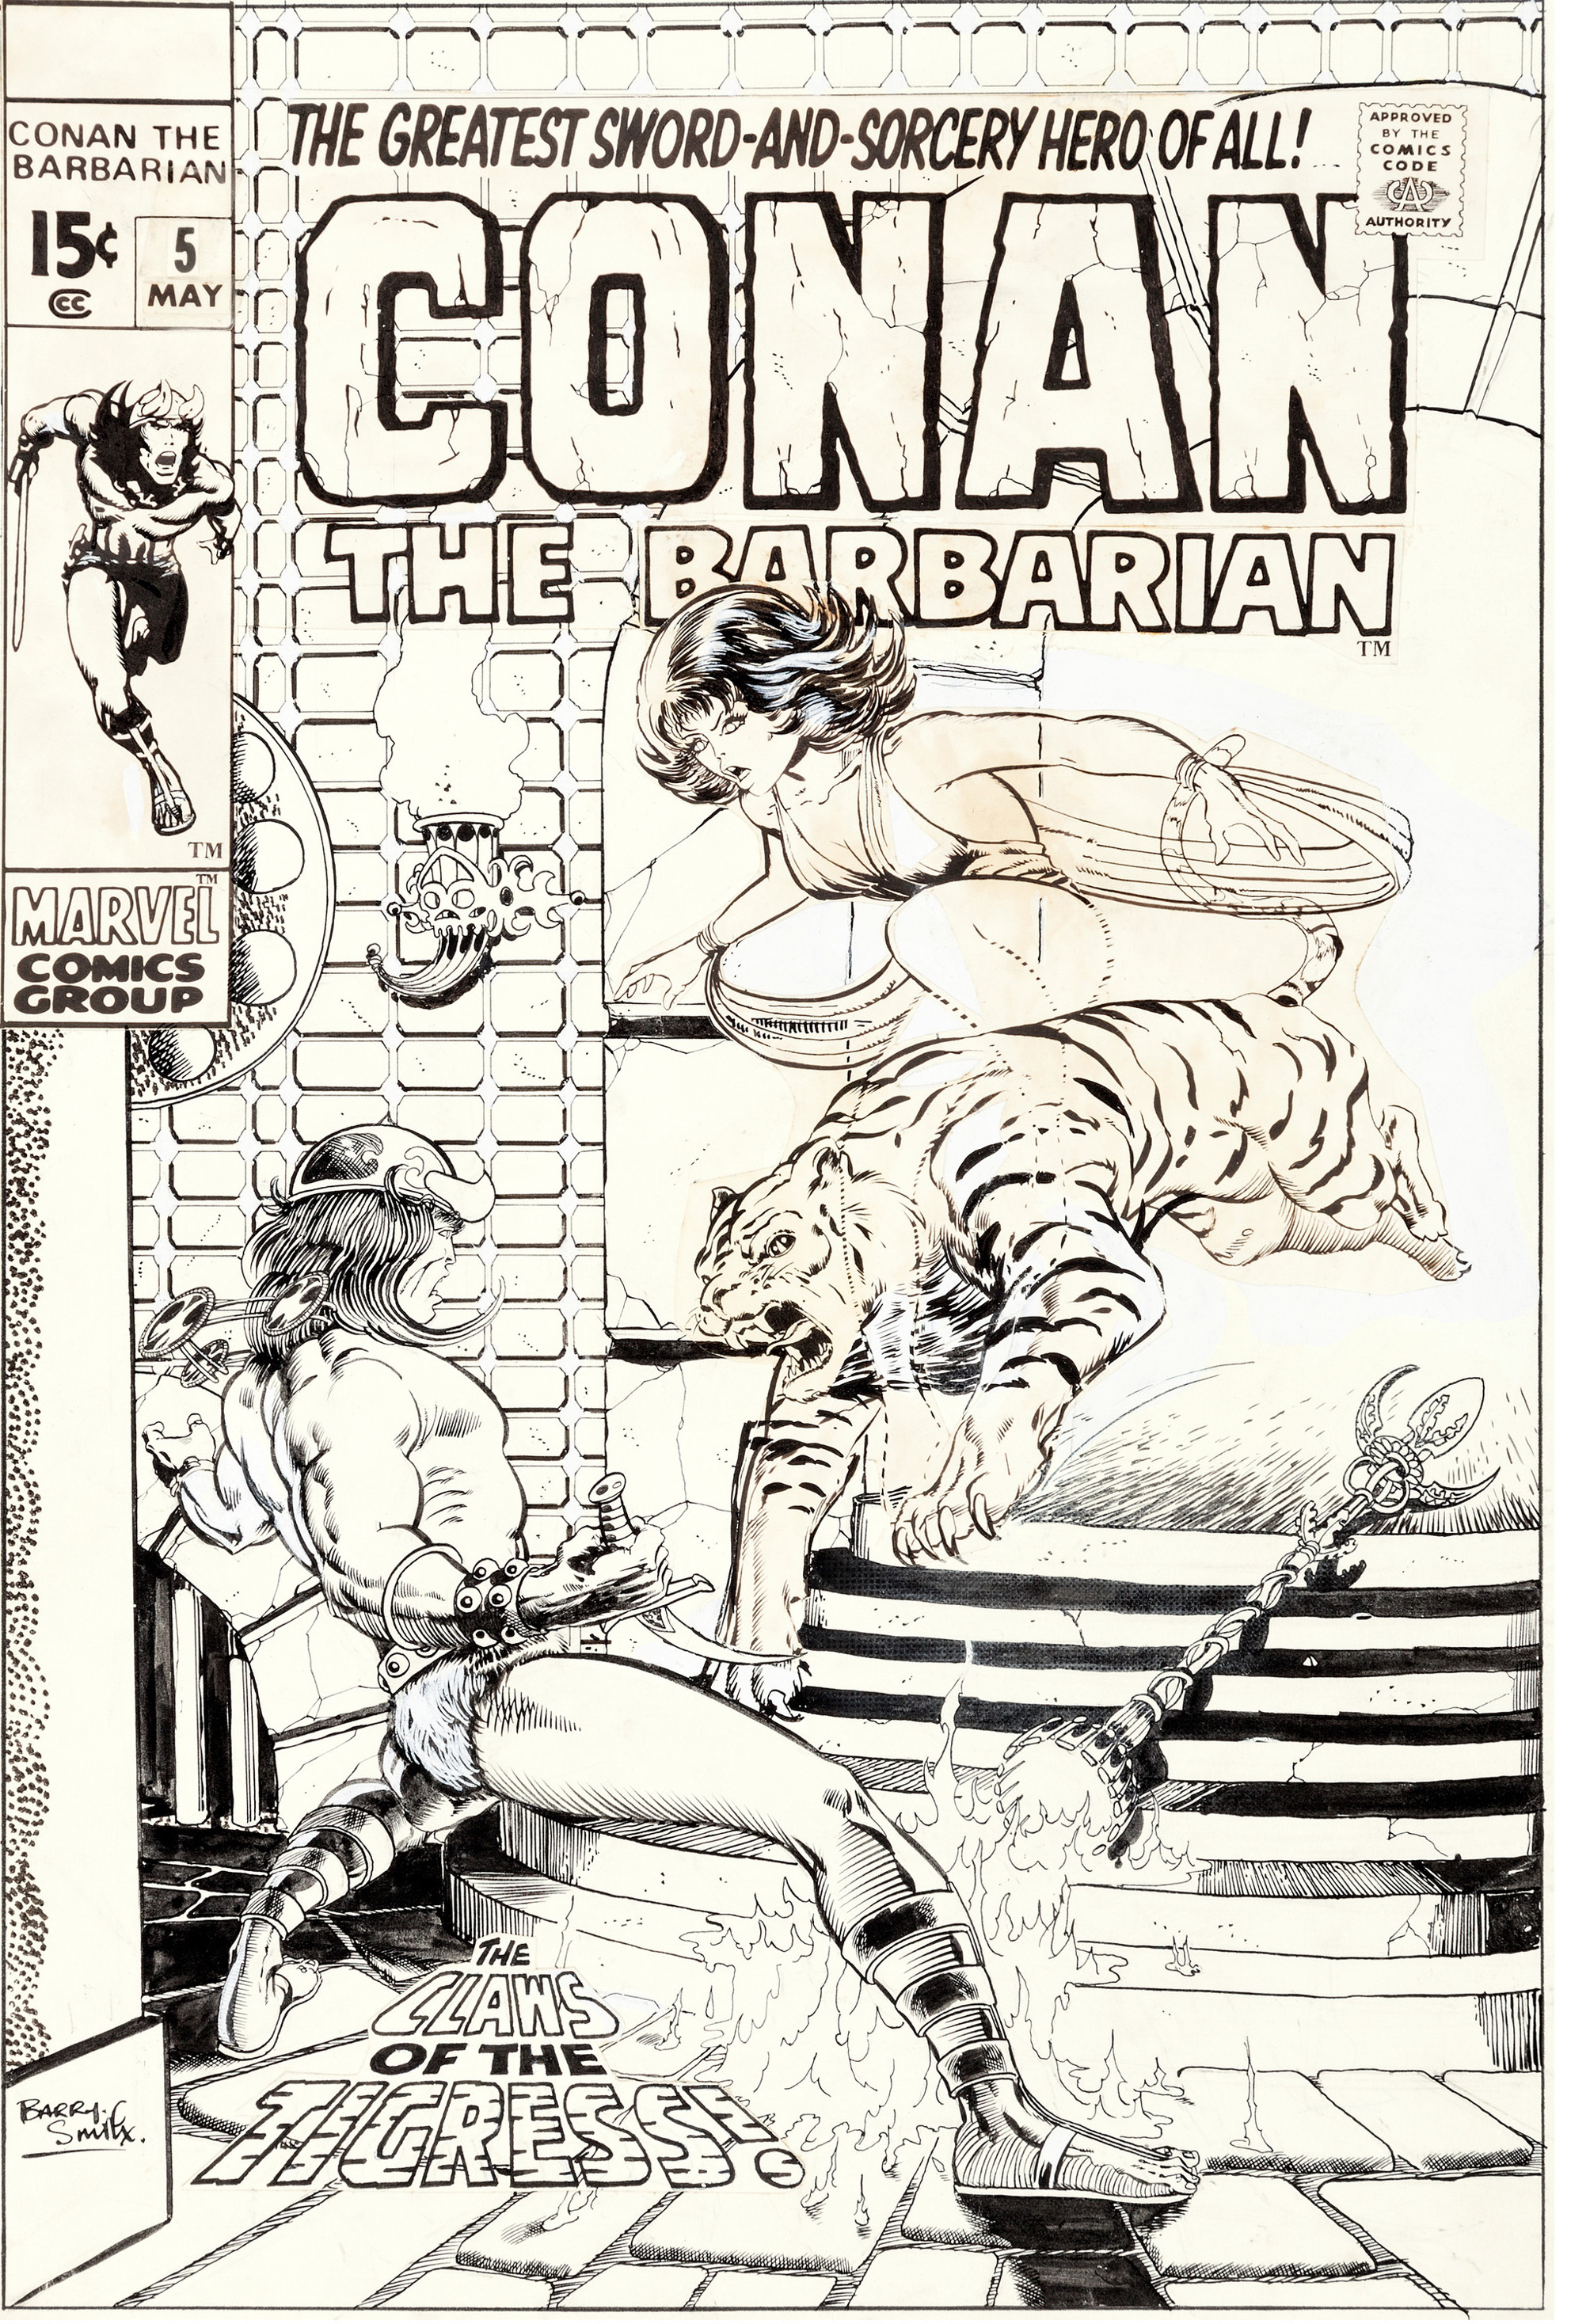 Barry Windsor Smith Conan the Barbarian #5 cover